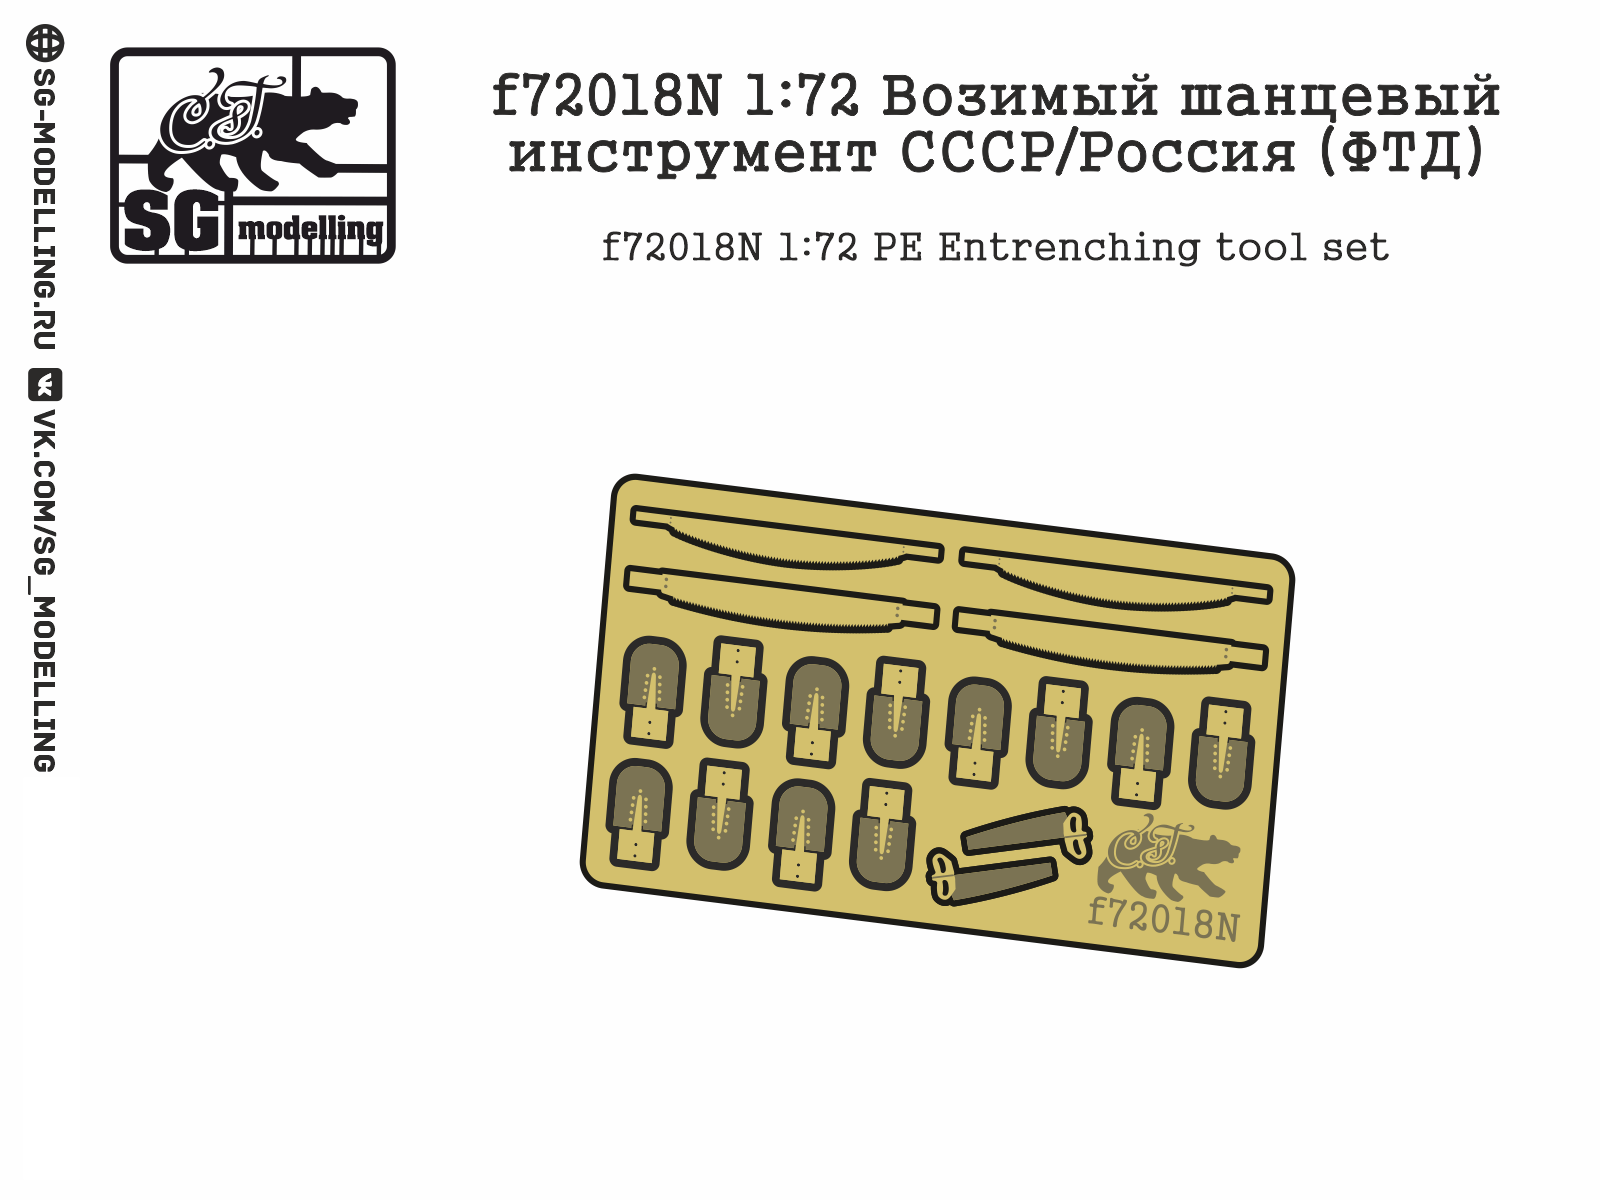 F72018n 1:72 Brisher Chantsez Instrument of the USSR/Russia (FTD) - imodeller.store